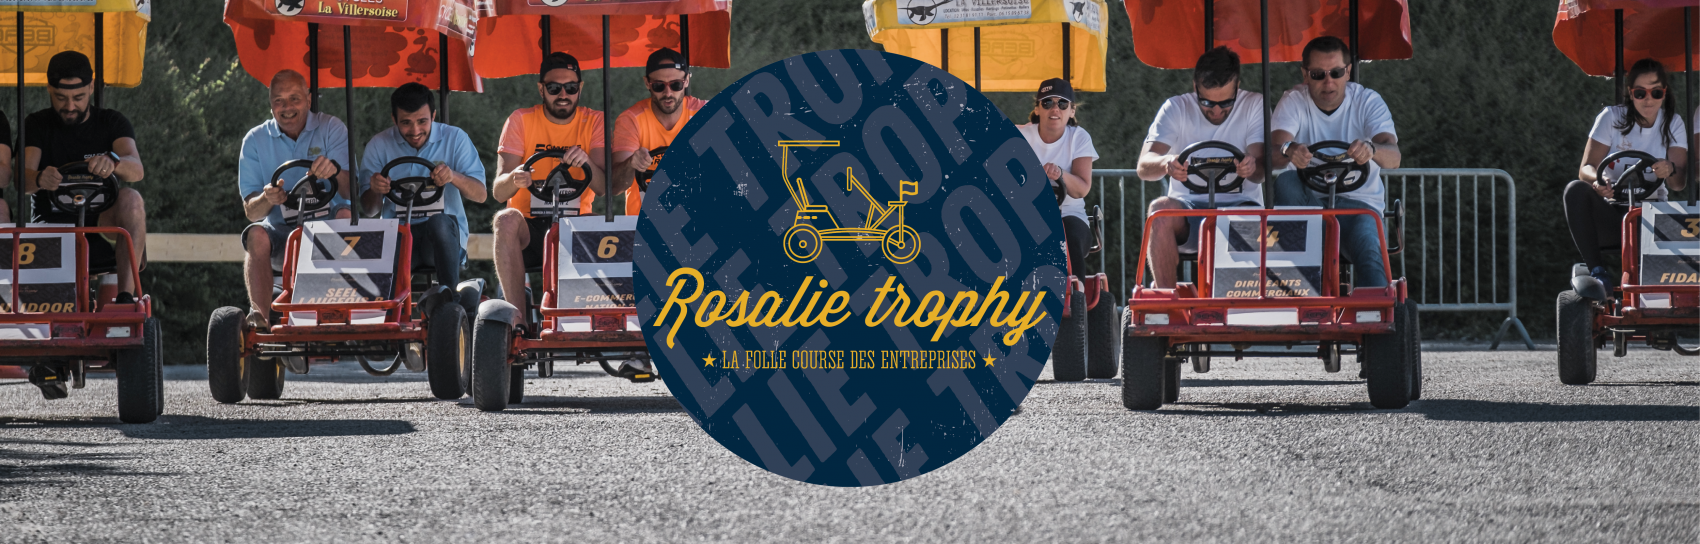 Rosalie-trophy-bandeau